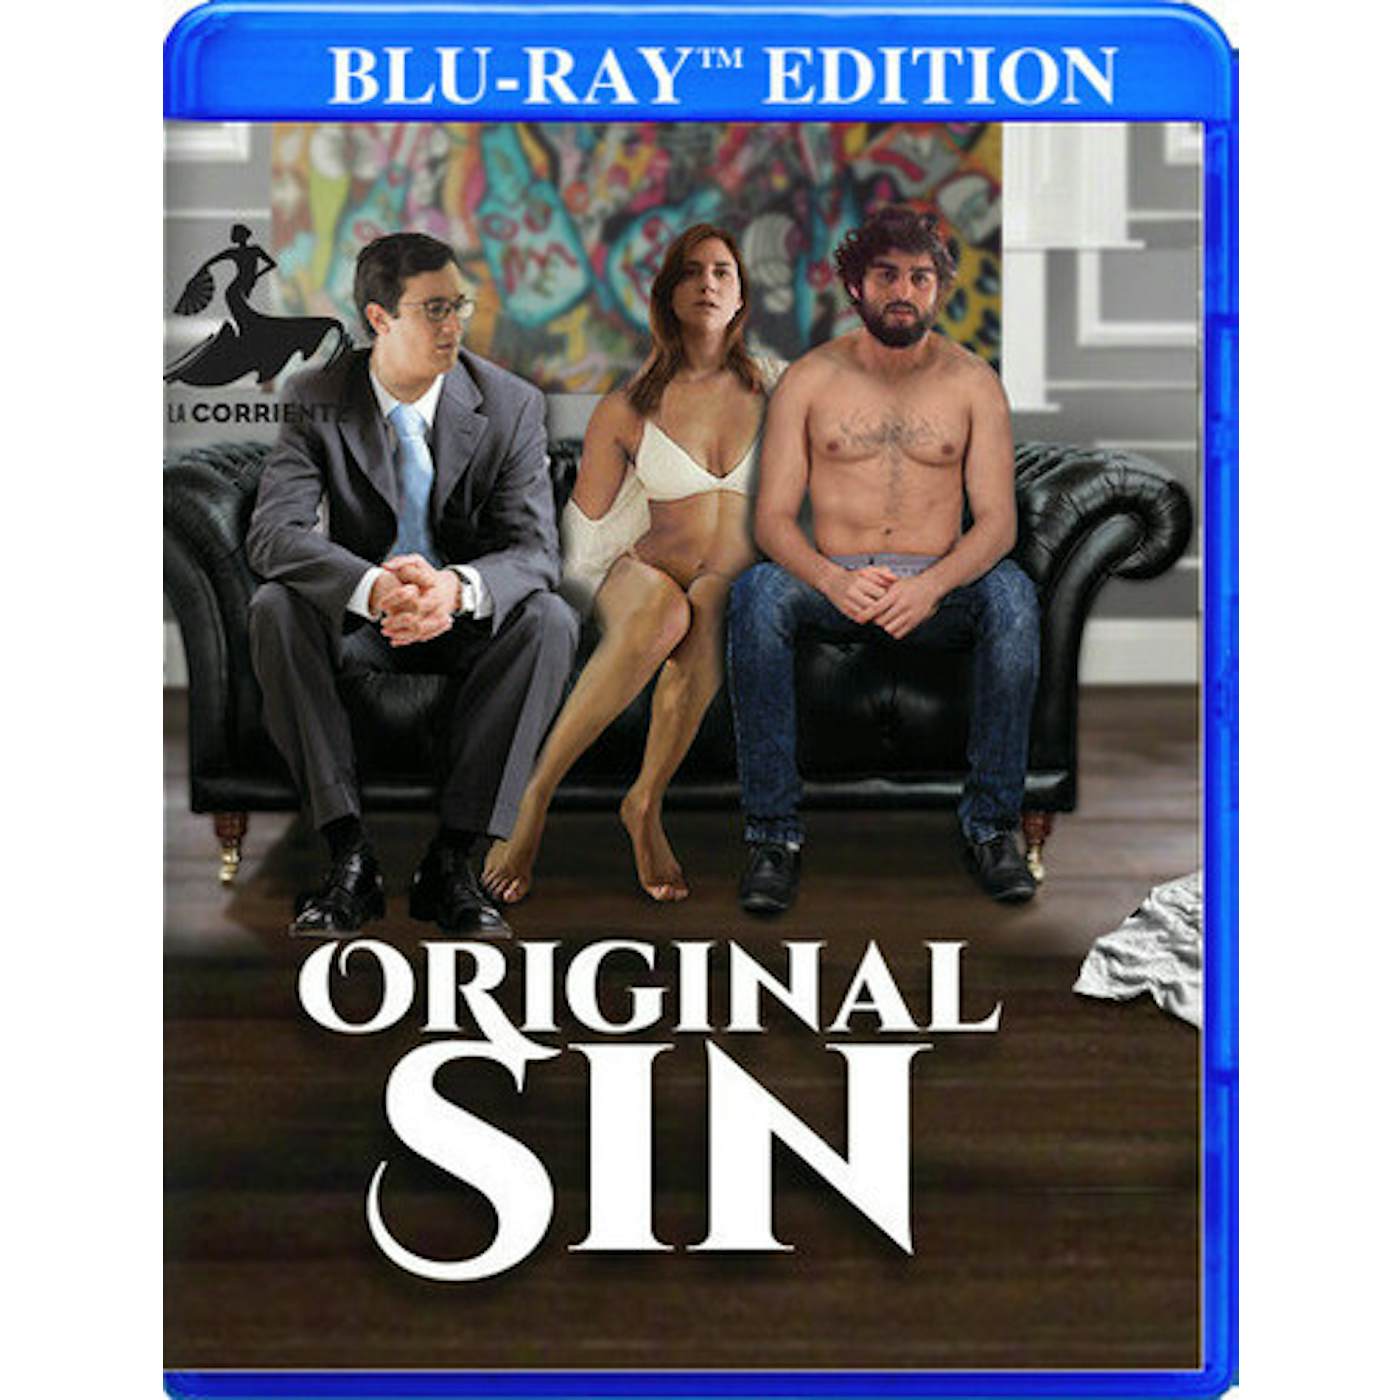 ORIGINAL SIN Blu-ray